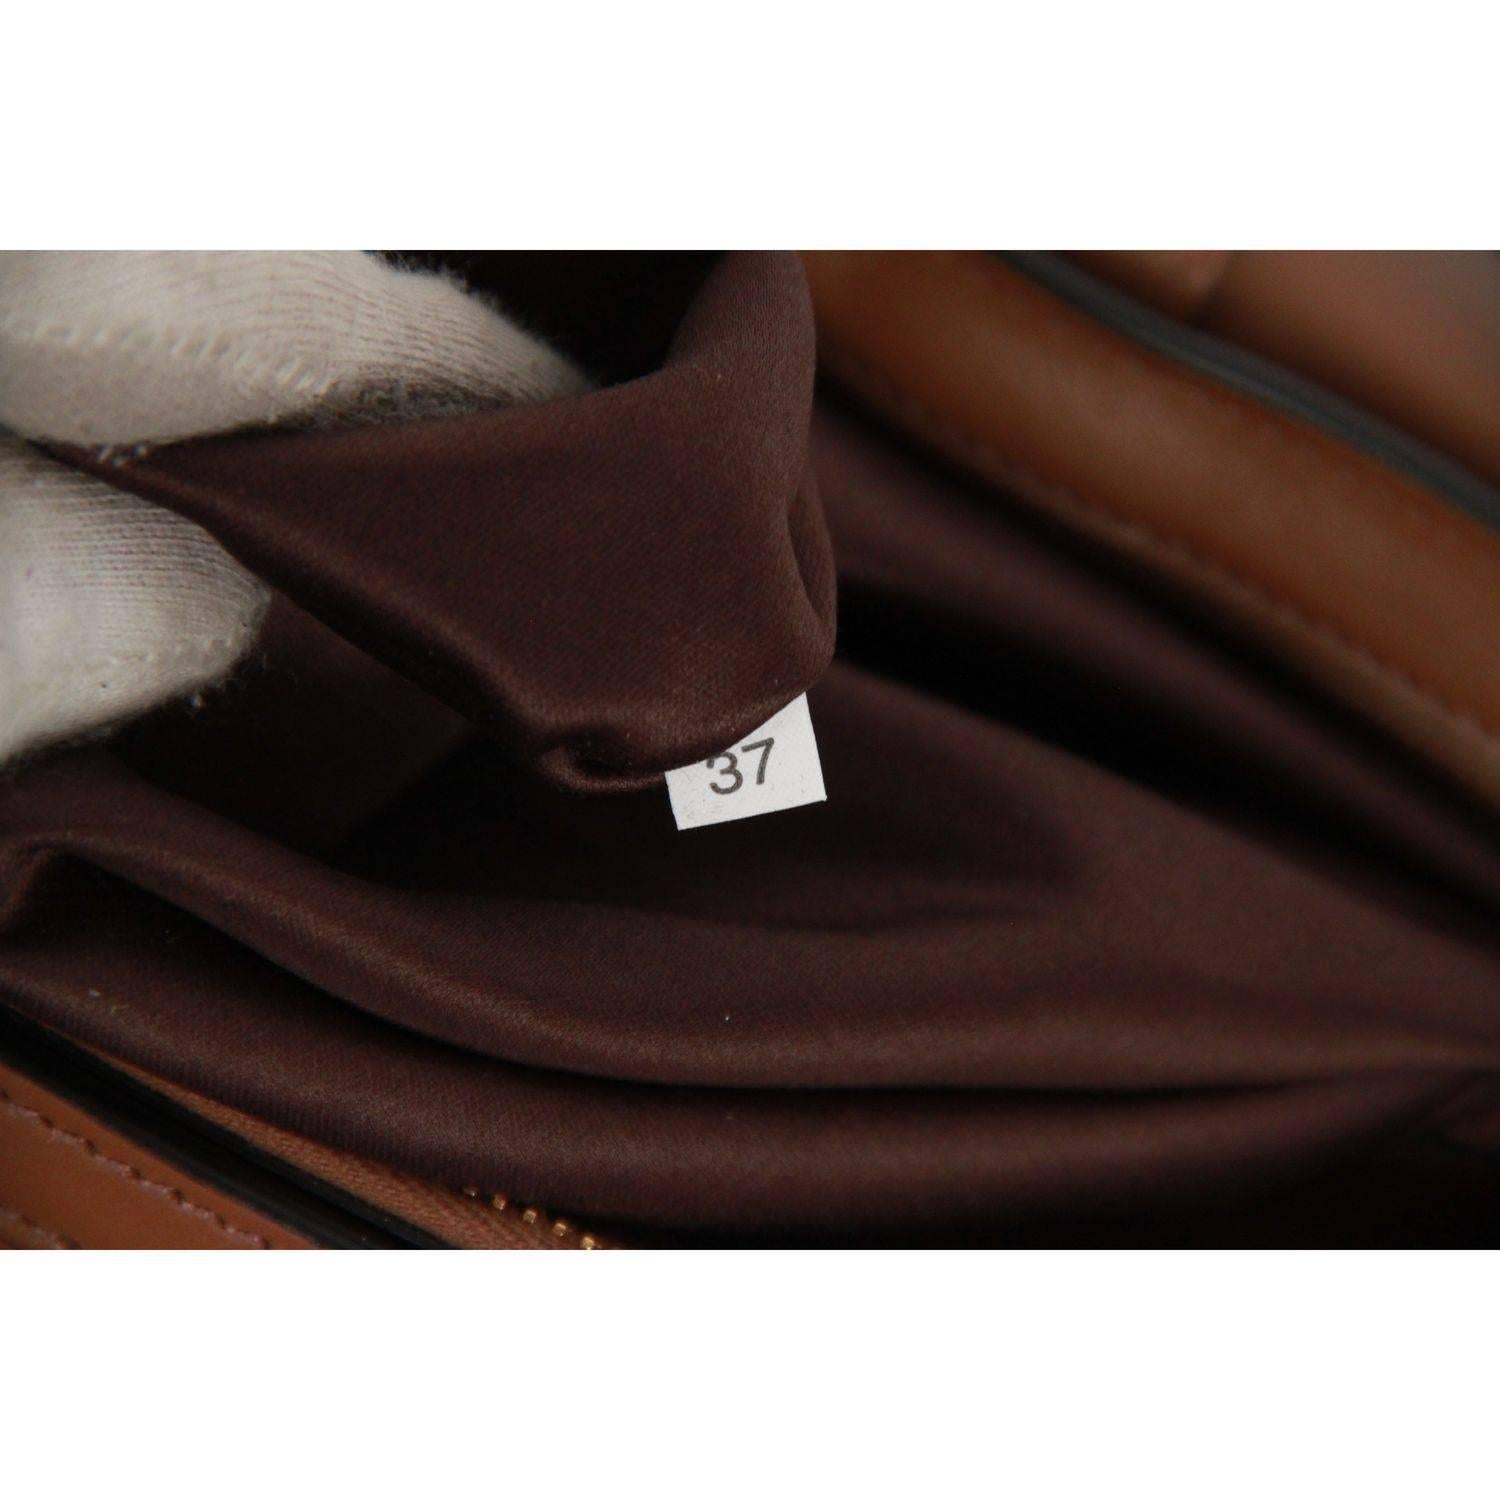 MIU MIU Tan VITELLO SOFT Leather SATCHEL with STRAP RN1078 6